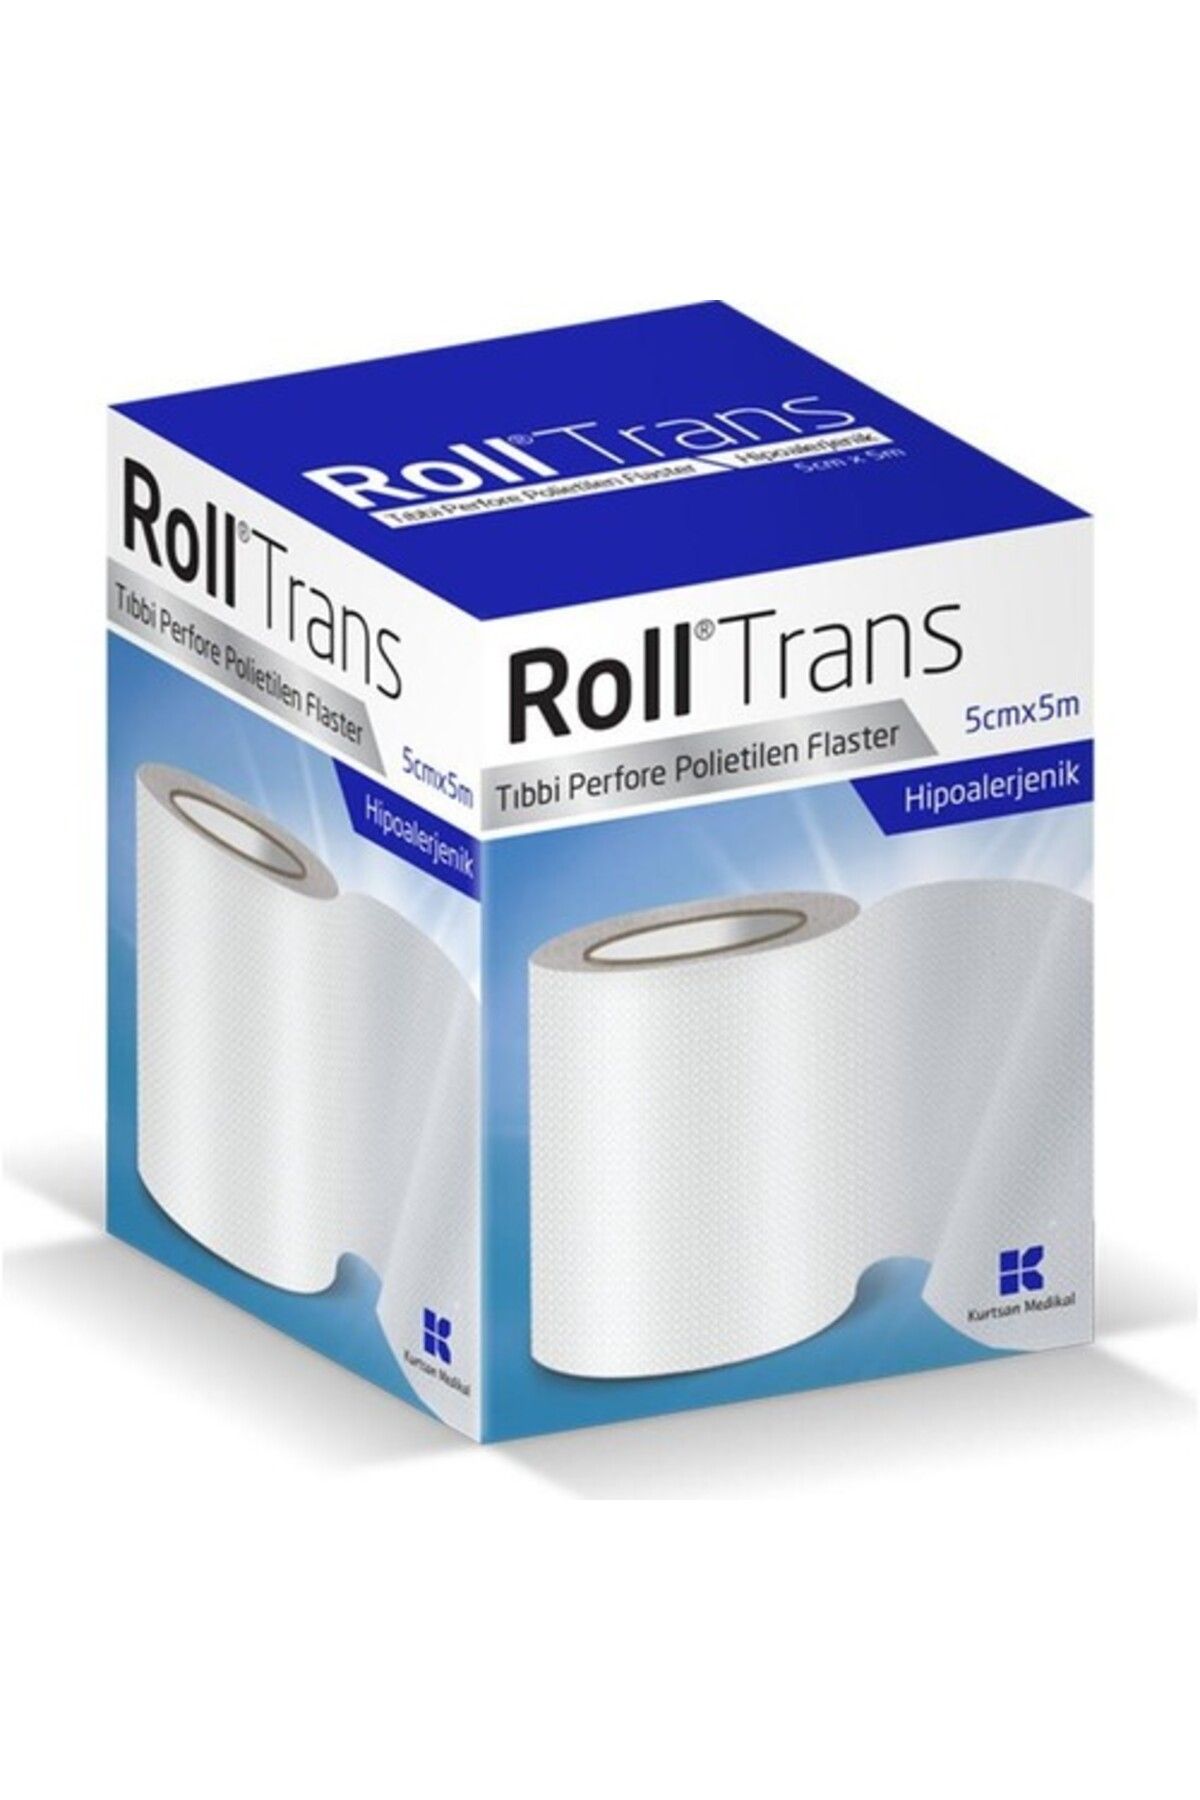 Roll Trans 5cm * 5m